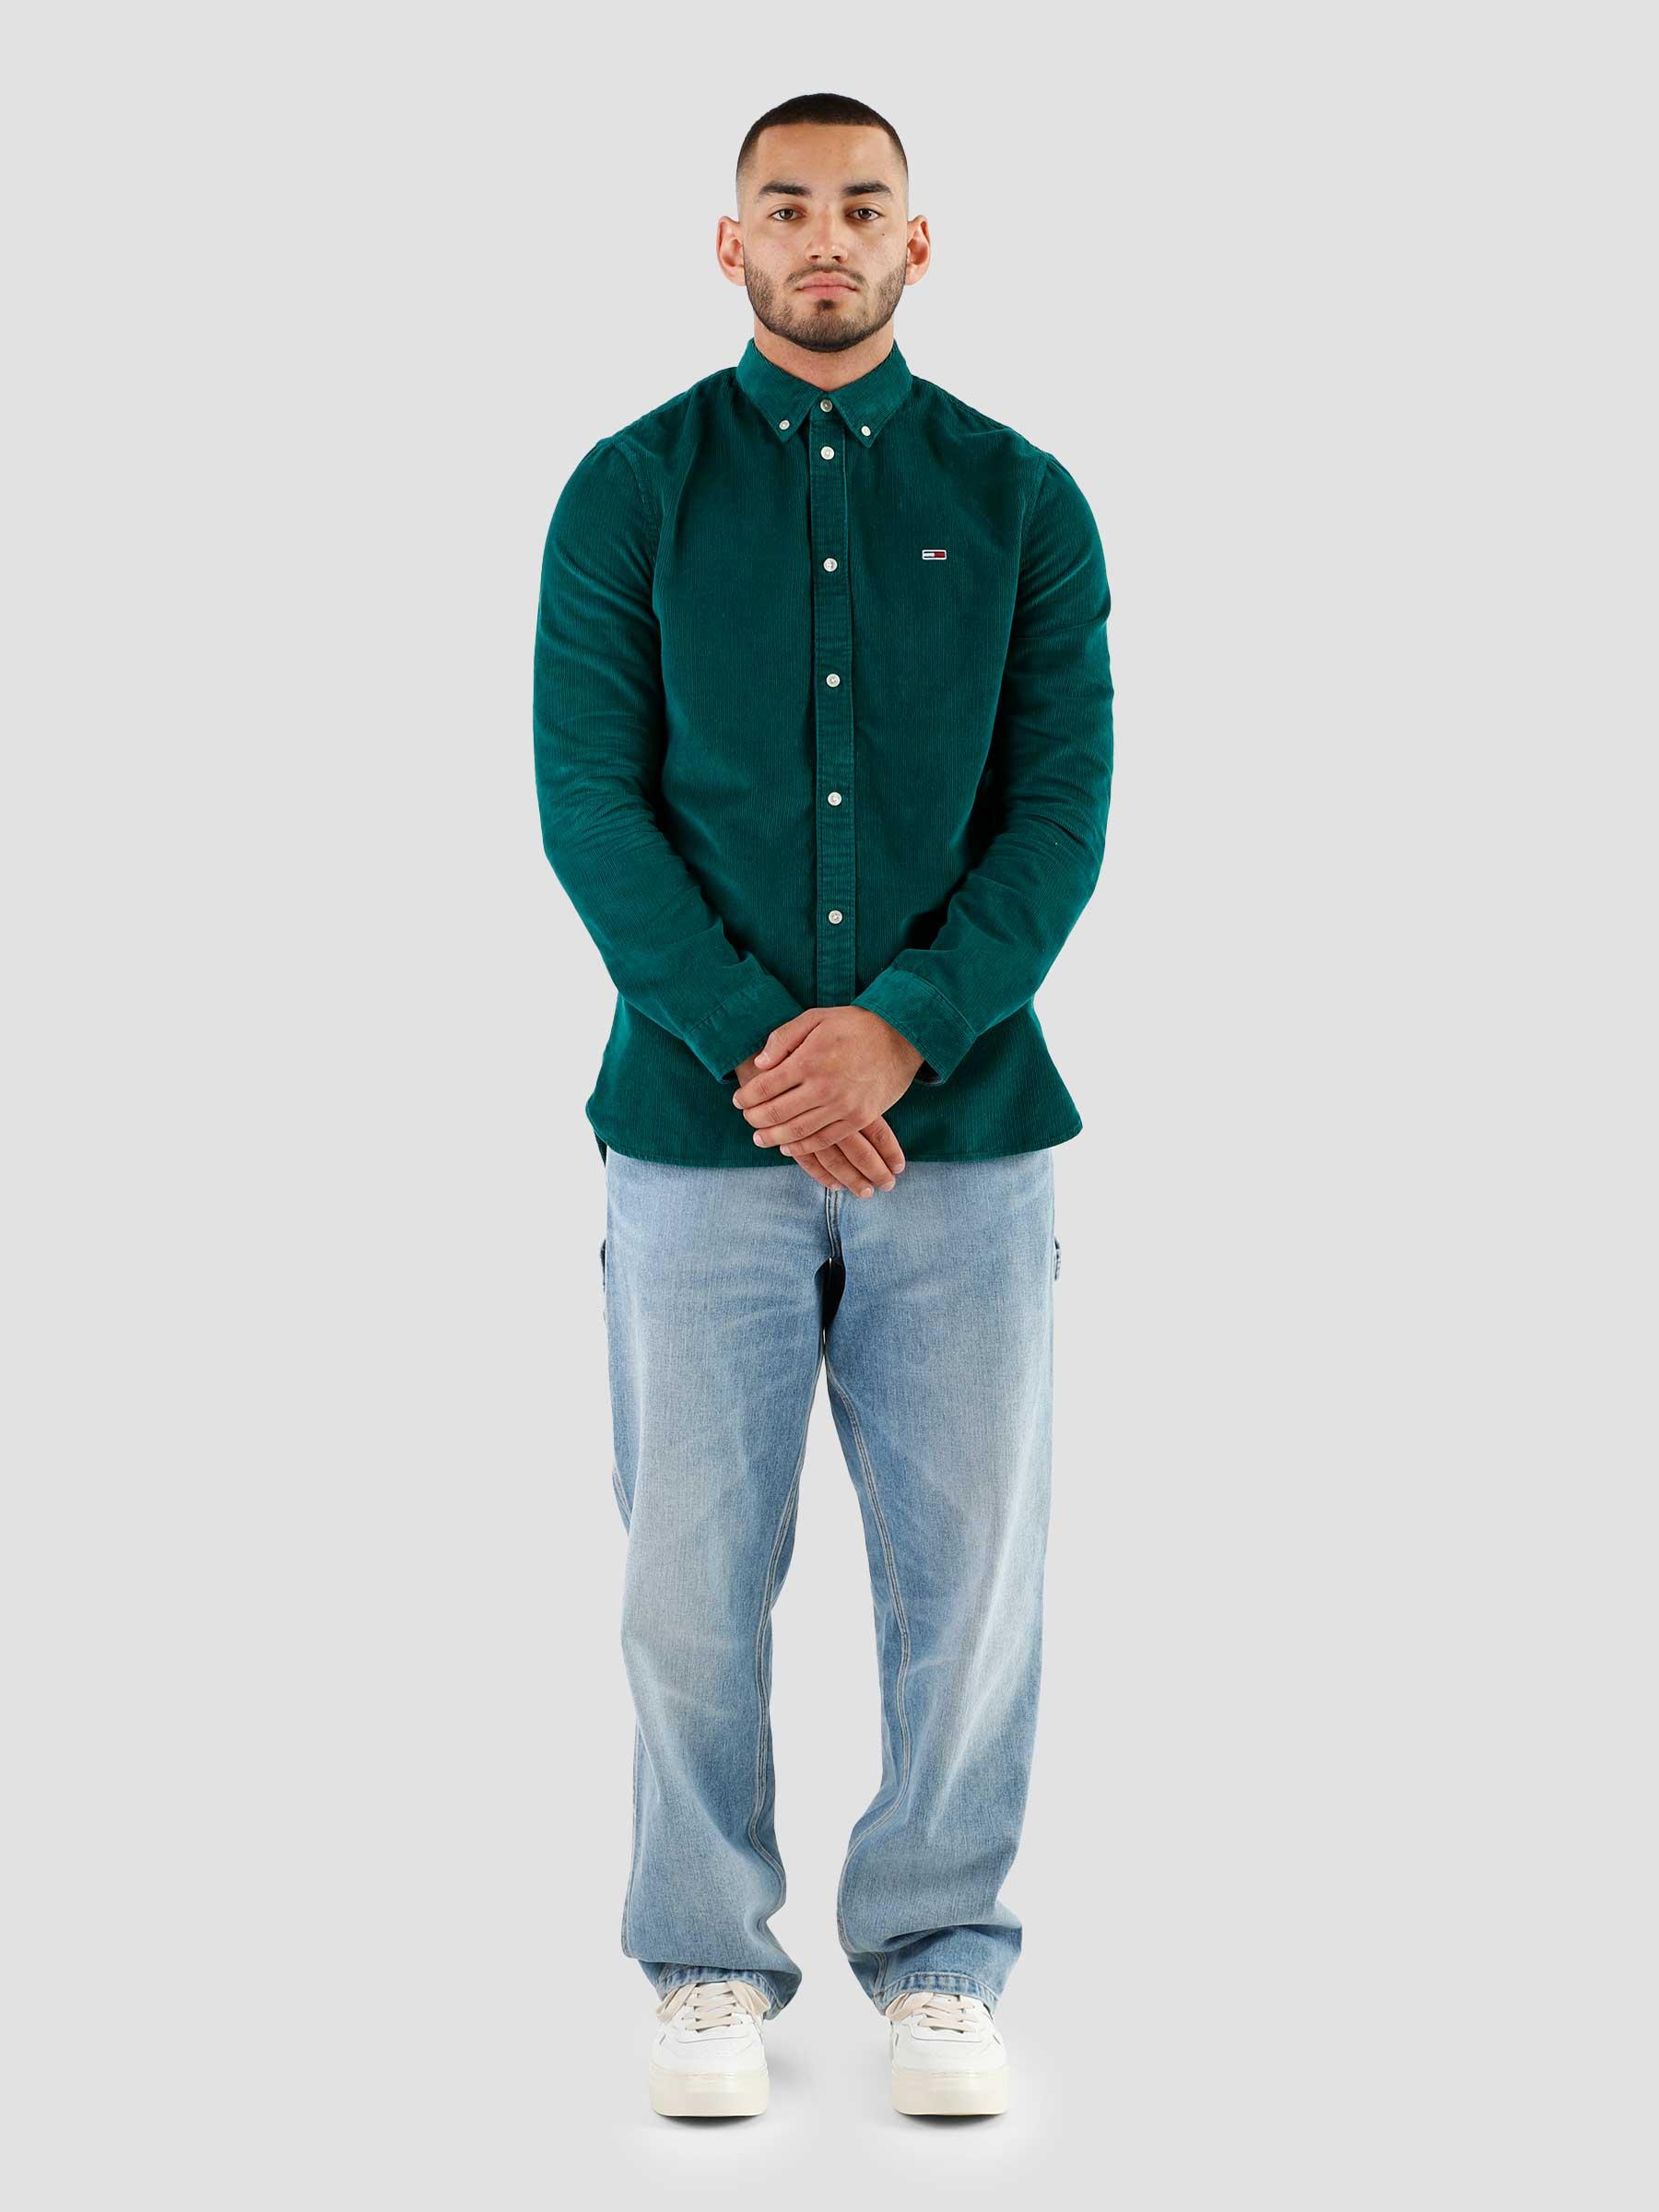 Jeans Dark Solid Cord Tommy TJM Shirt - Freshcotton Green Turf